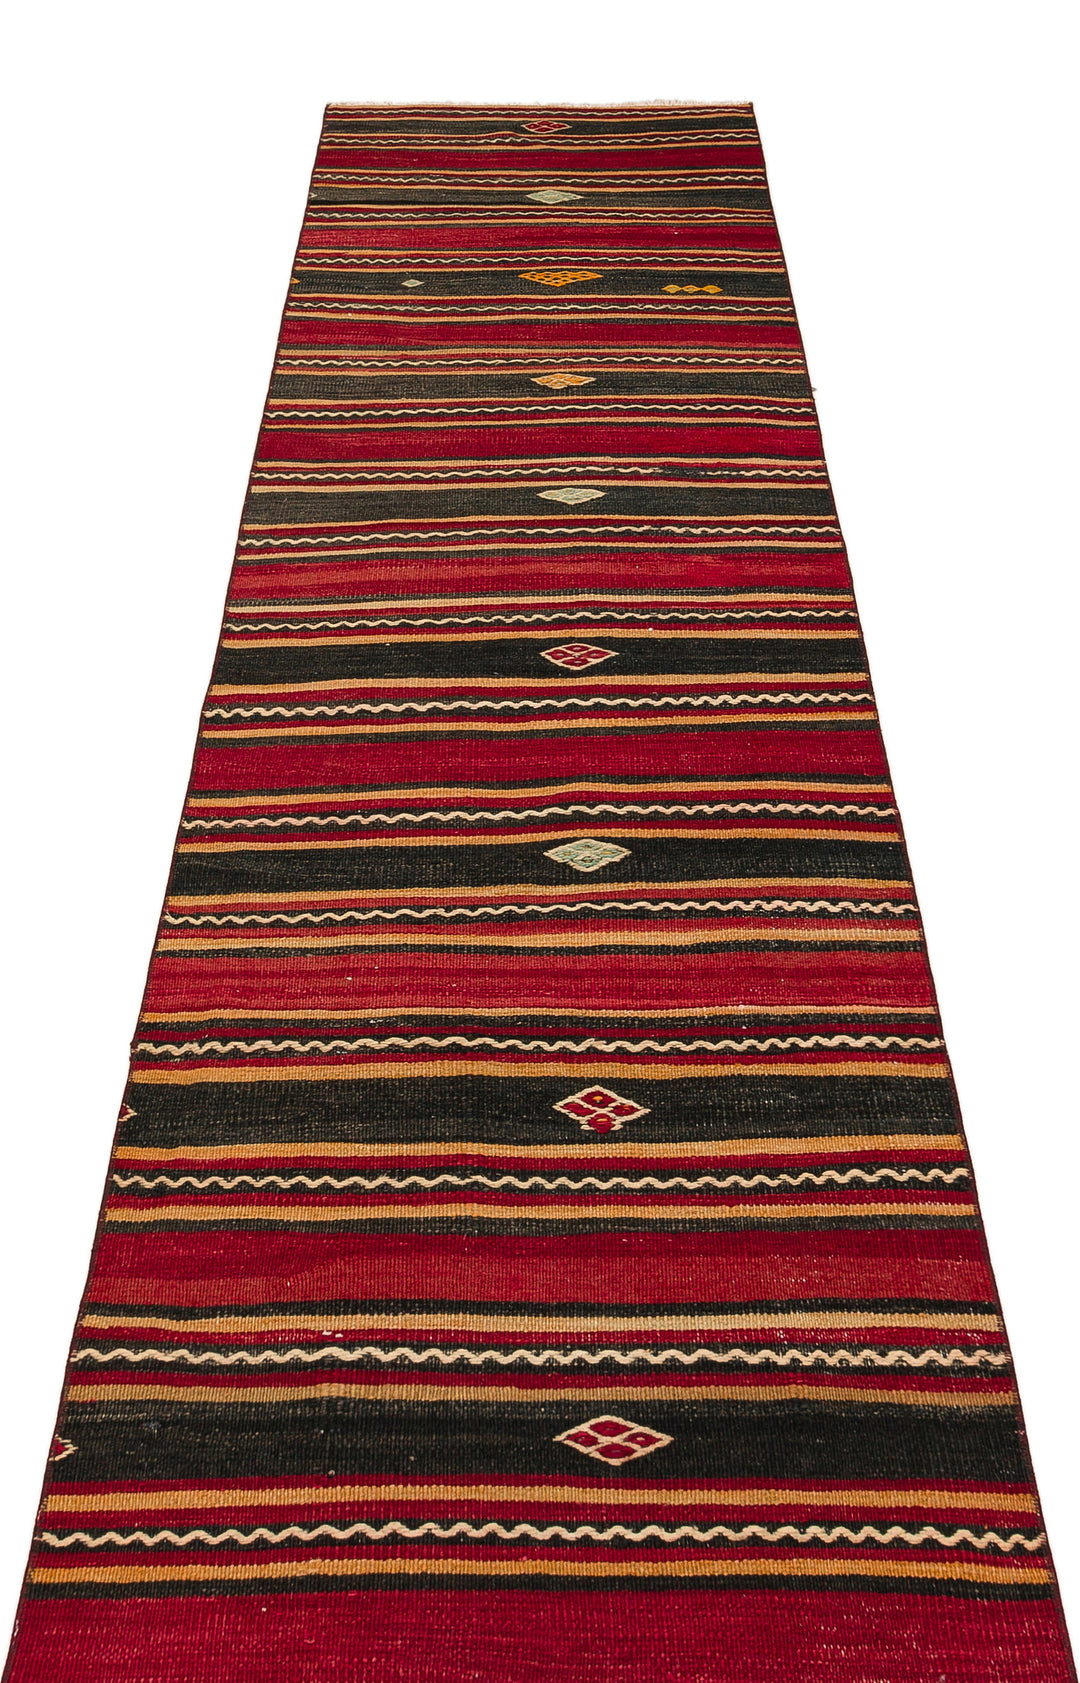 Cretan Red Striped Wool Hand-Woven Carpet 080 x 345